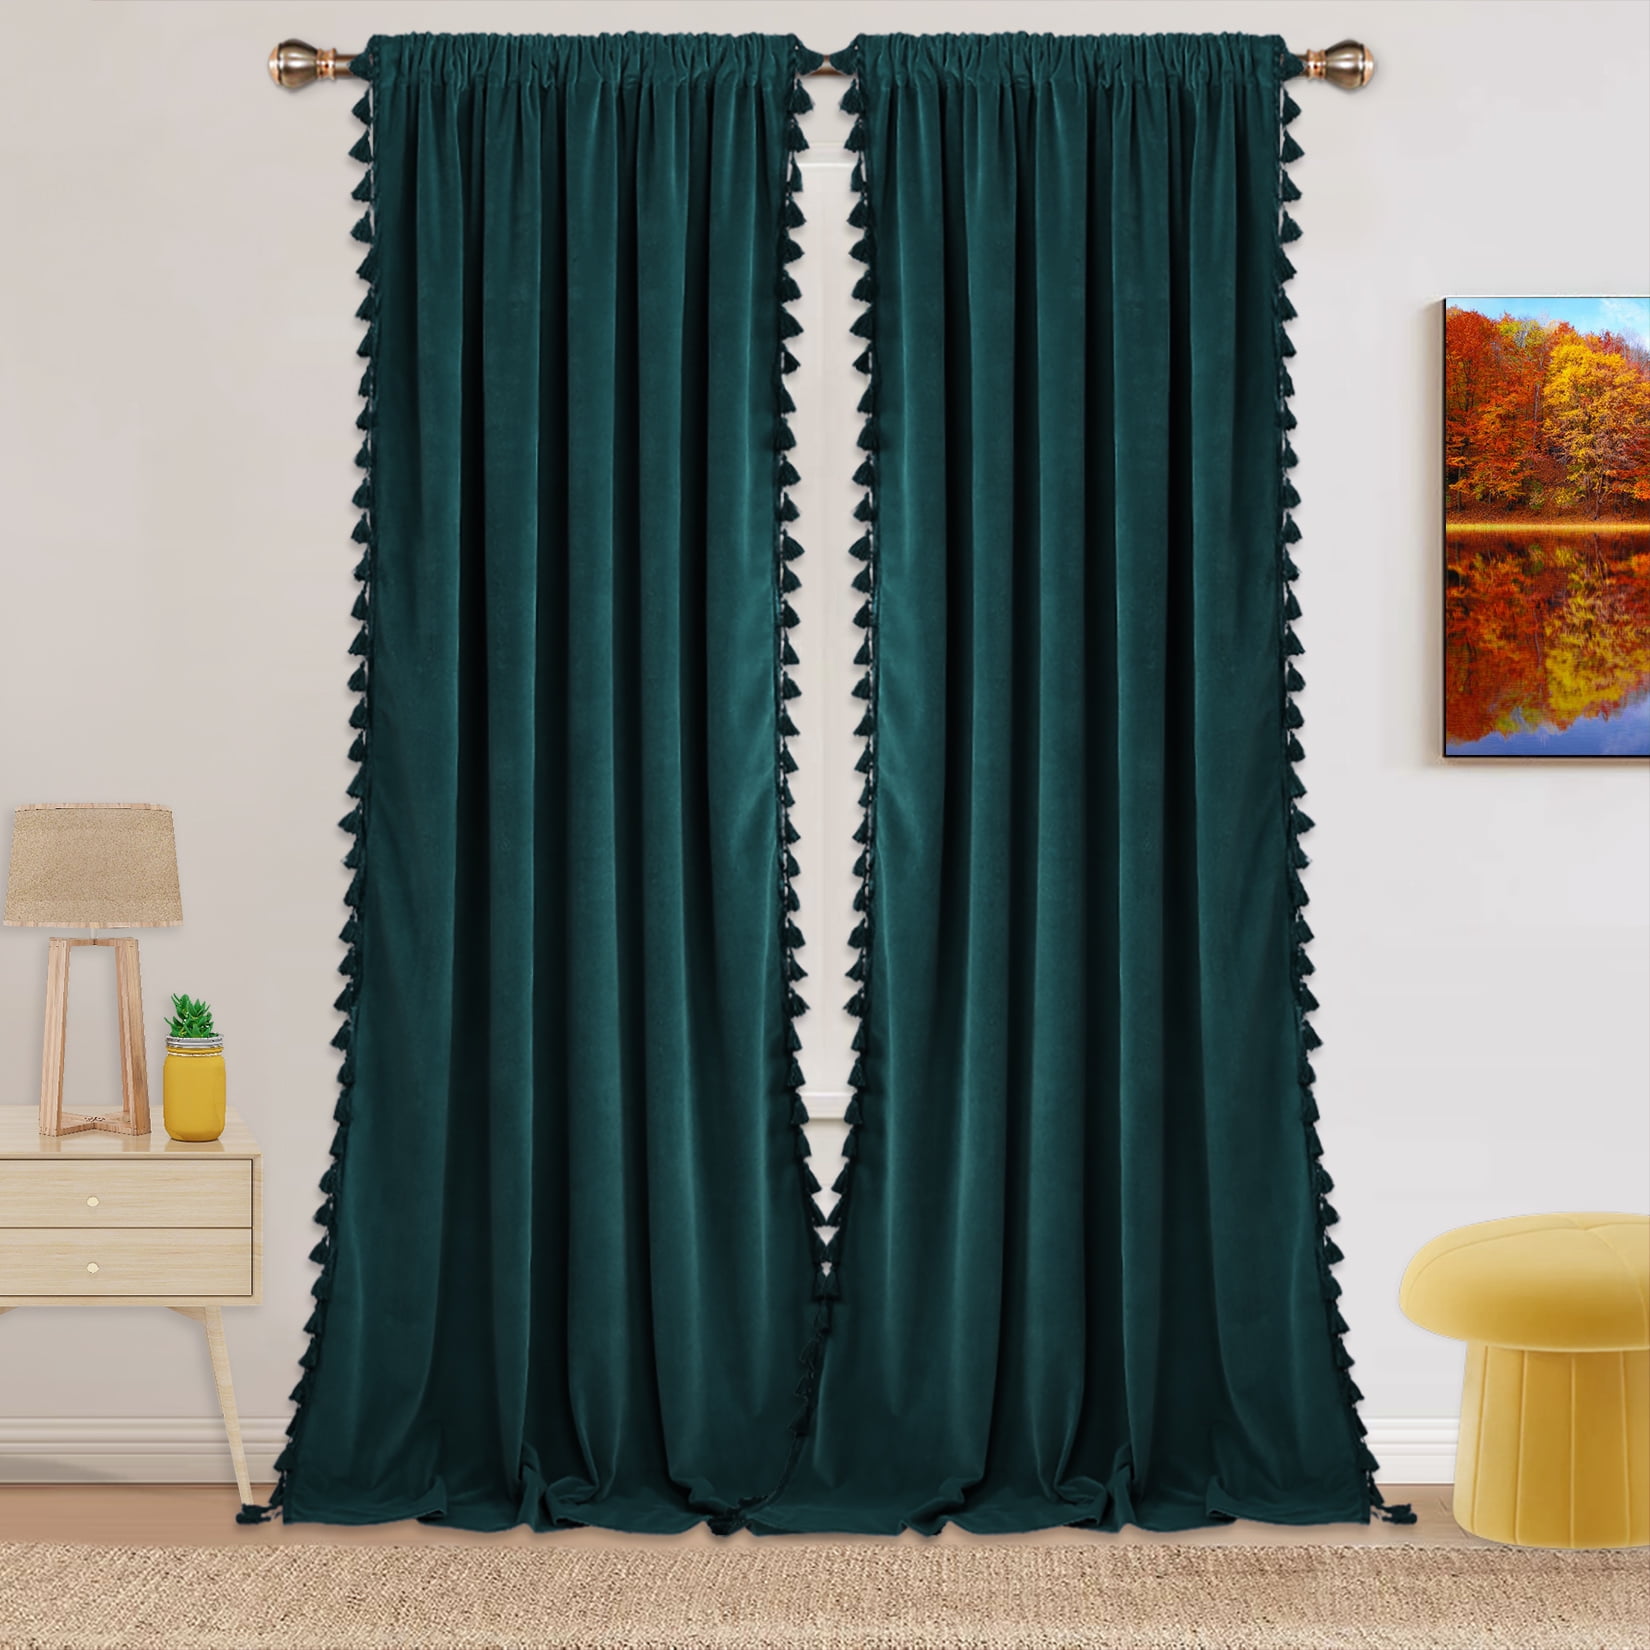 72 inch H Beige Velvet Curtain Panel w/Rod Pocket Top Drape Window Treatments 